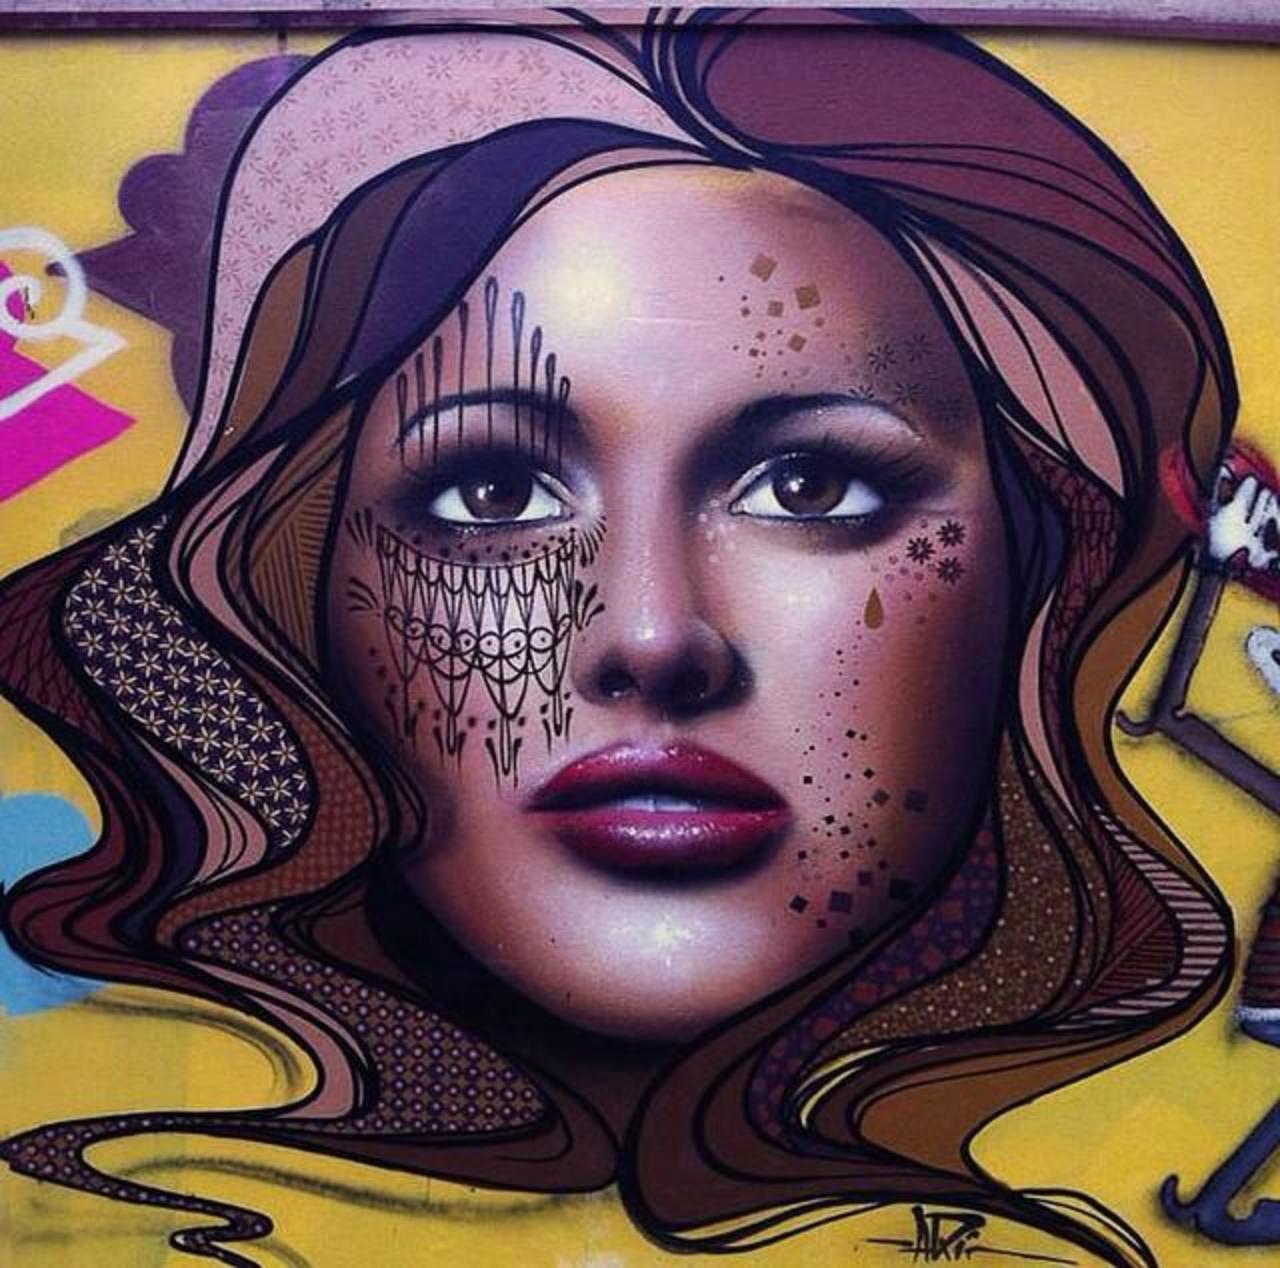 Beautiful photorealistic Street Art portrait by @aqiluciano (Aqi Luciano)

#art #mural #graffiti #streetart http://t.co/mr7vP0Vjor